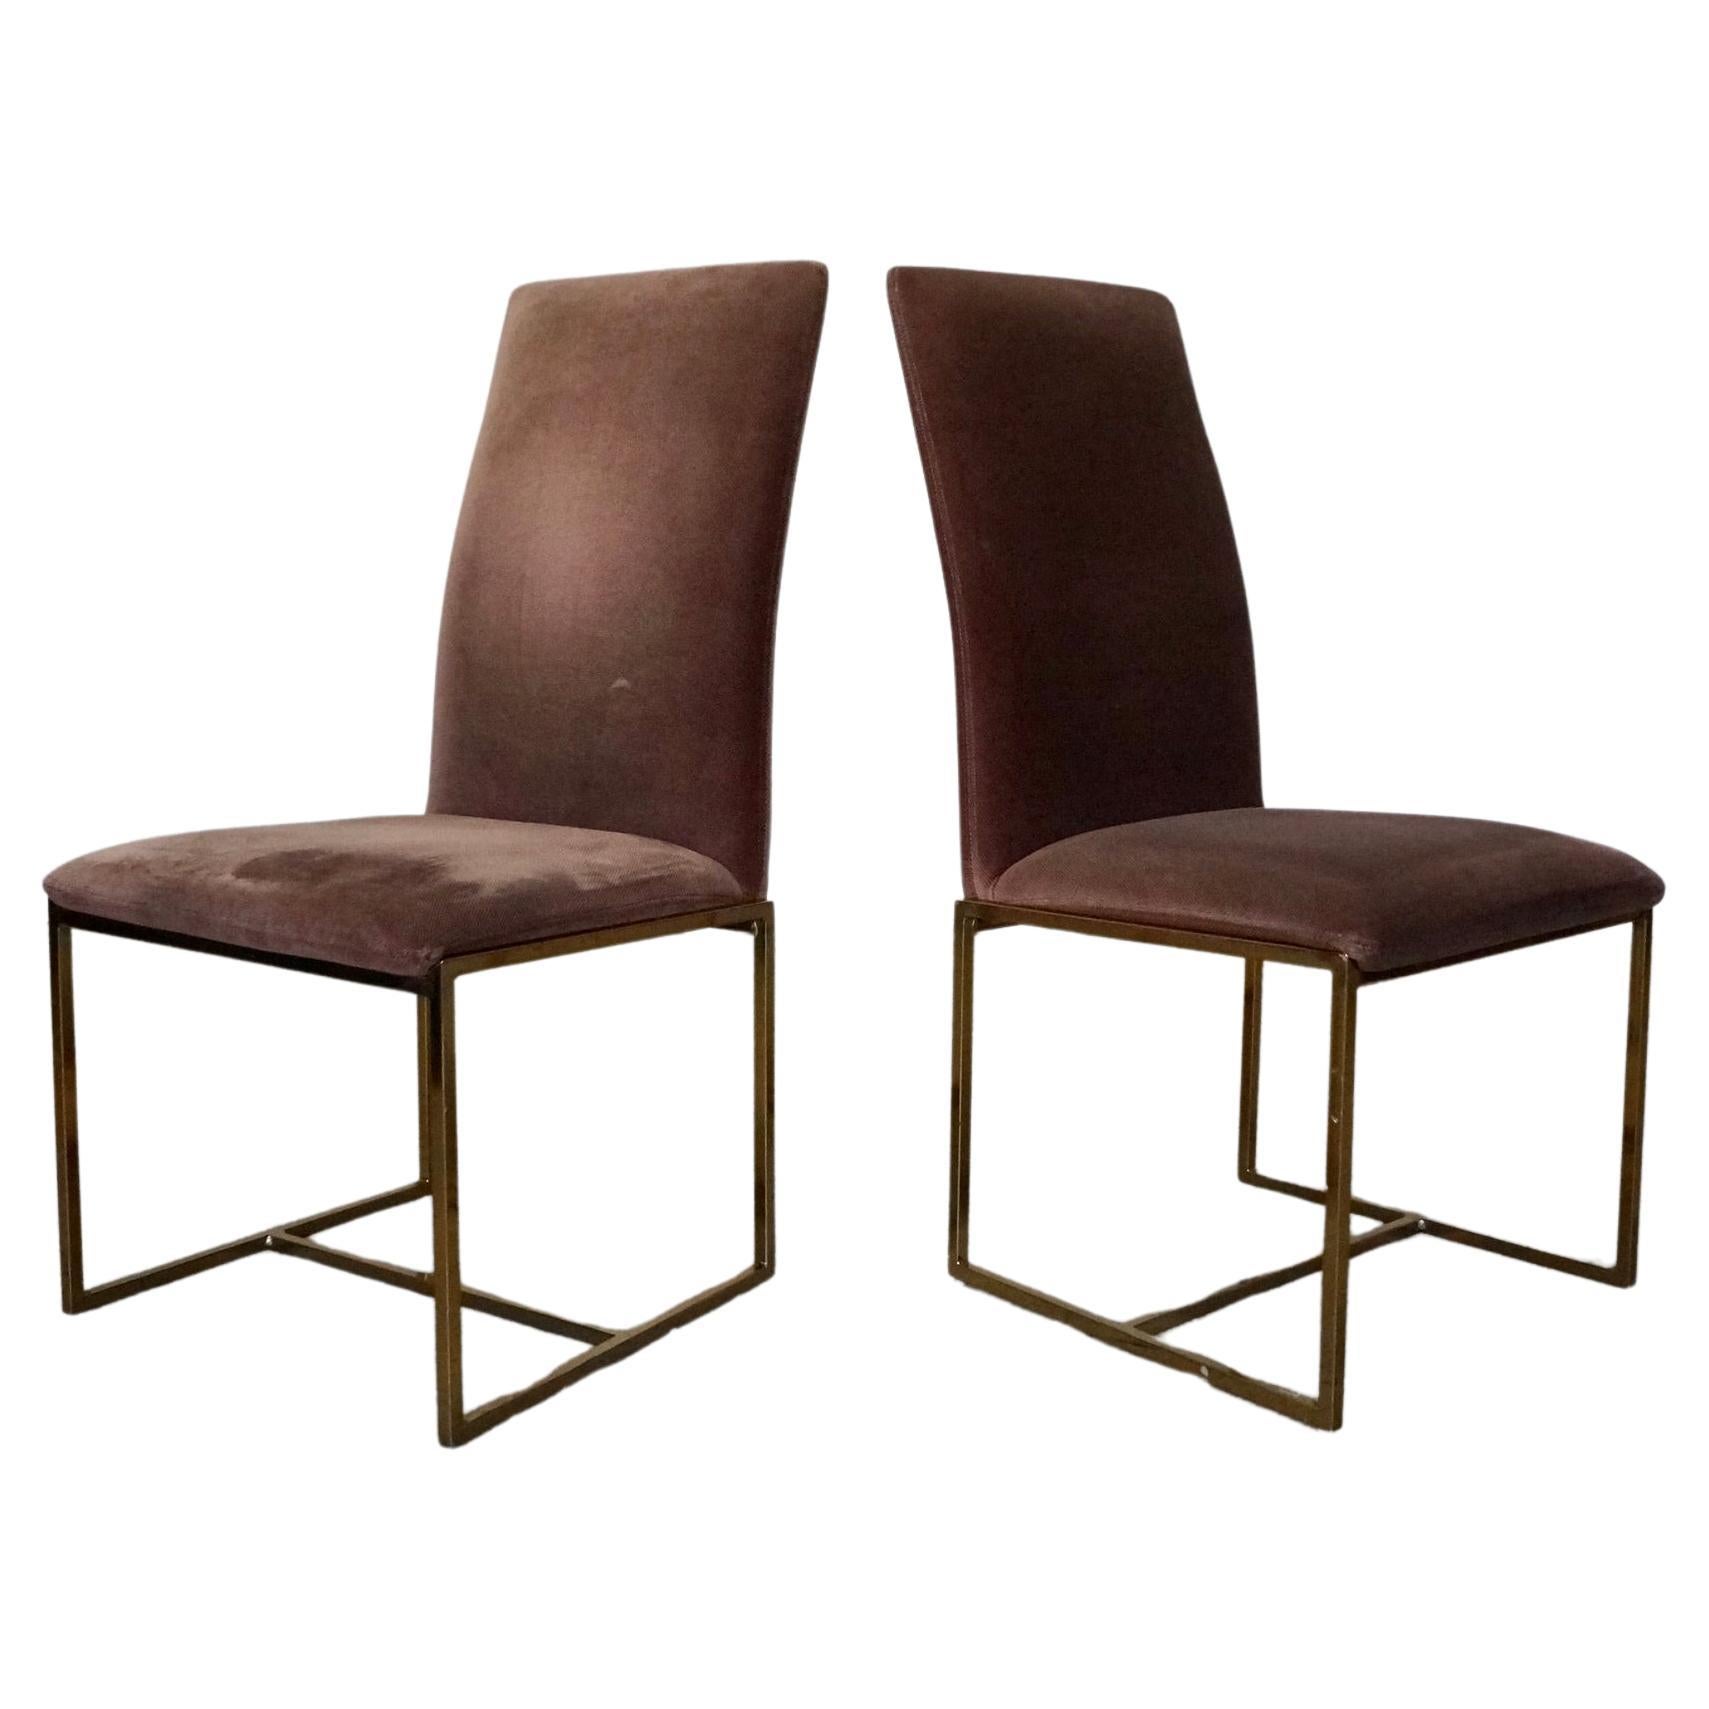 1970's Mid-Century Modern Milo Baughman Style Brass Dining Chairs - a Pair